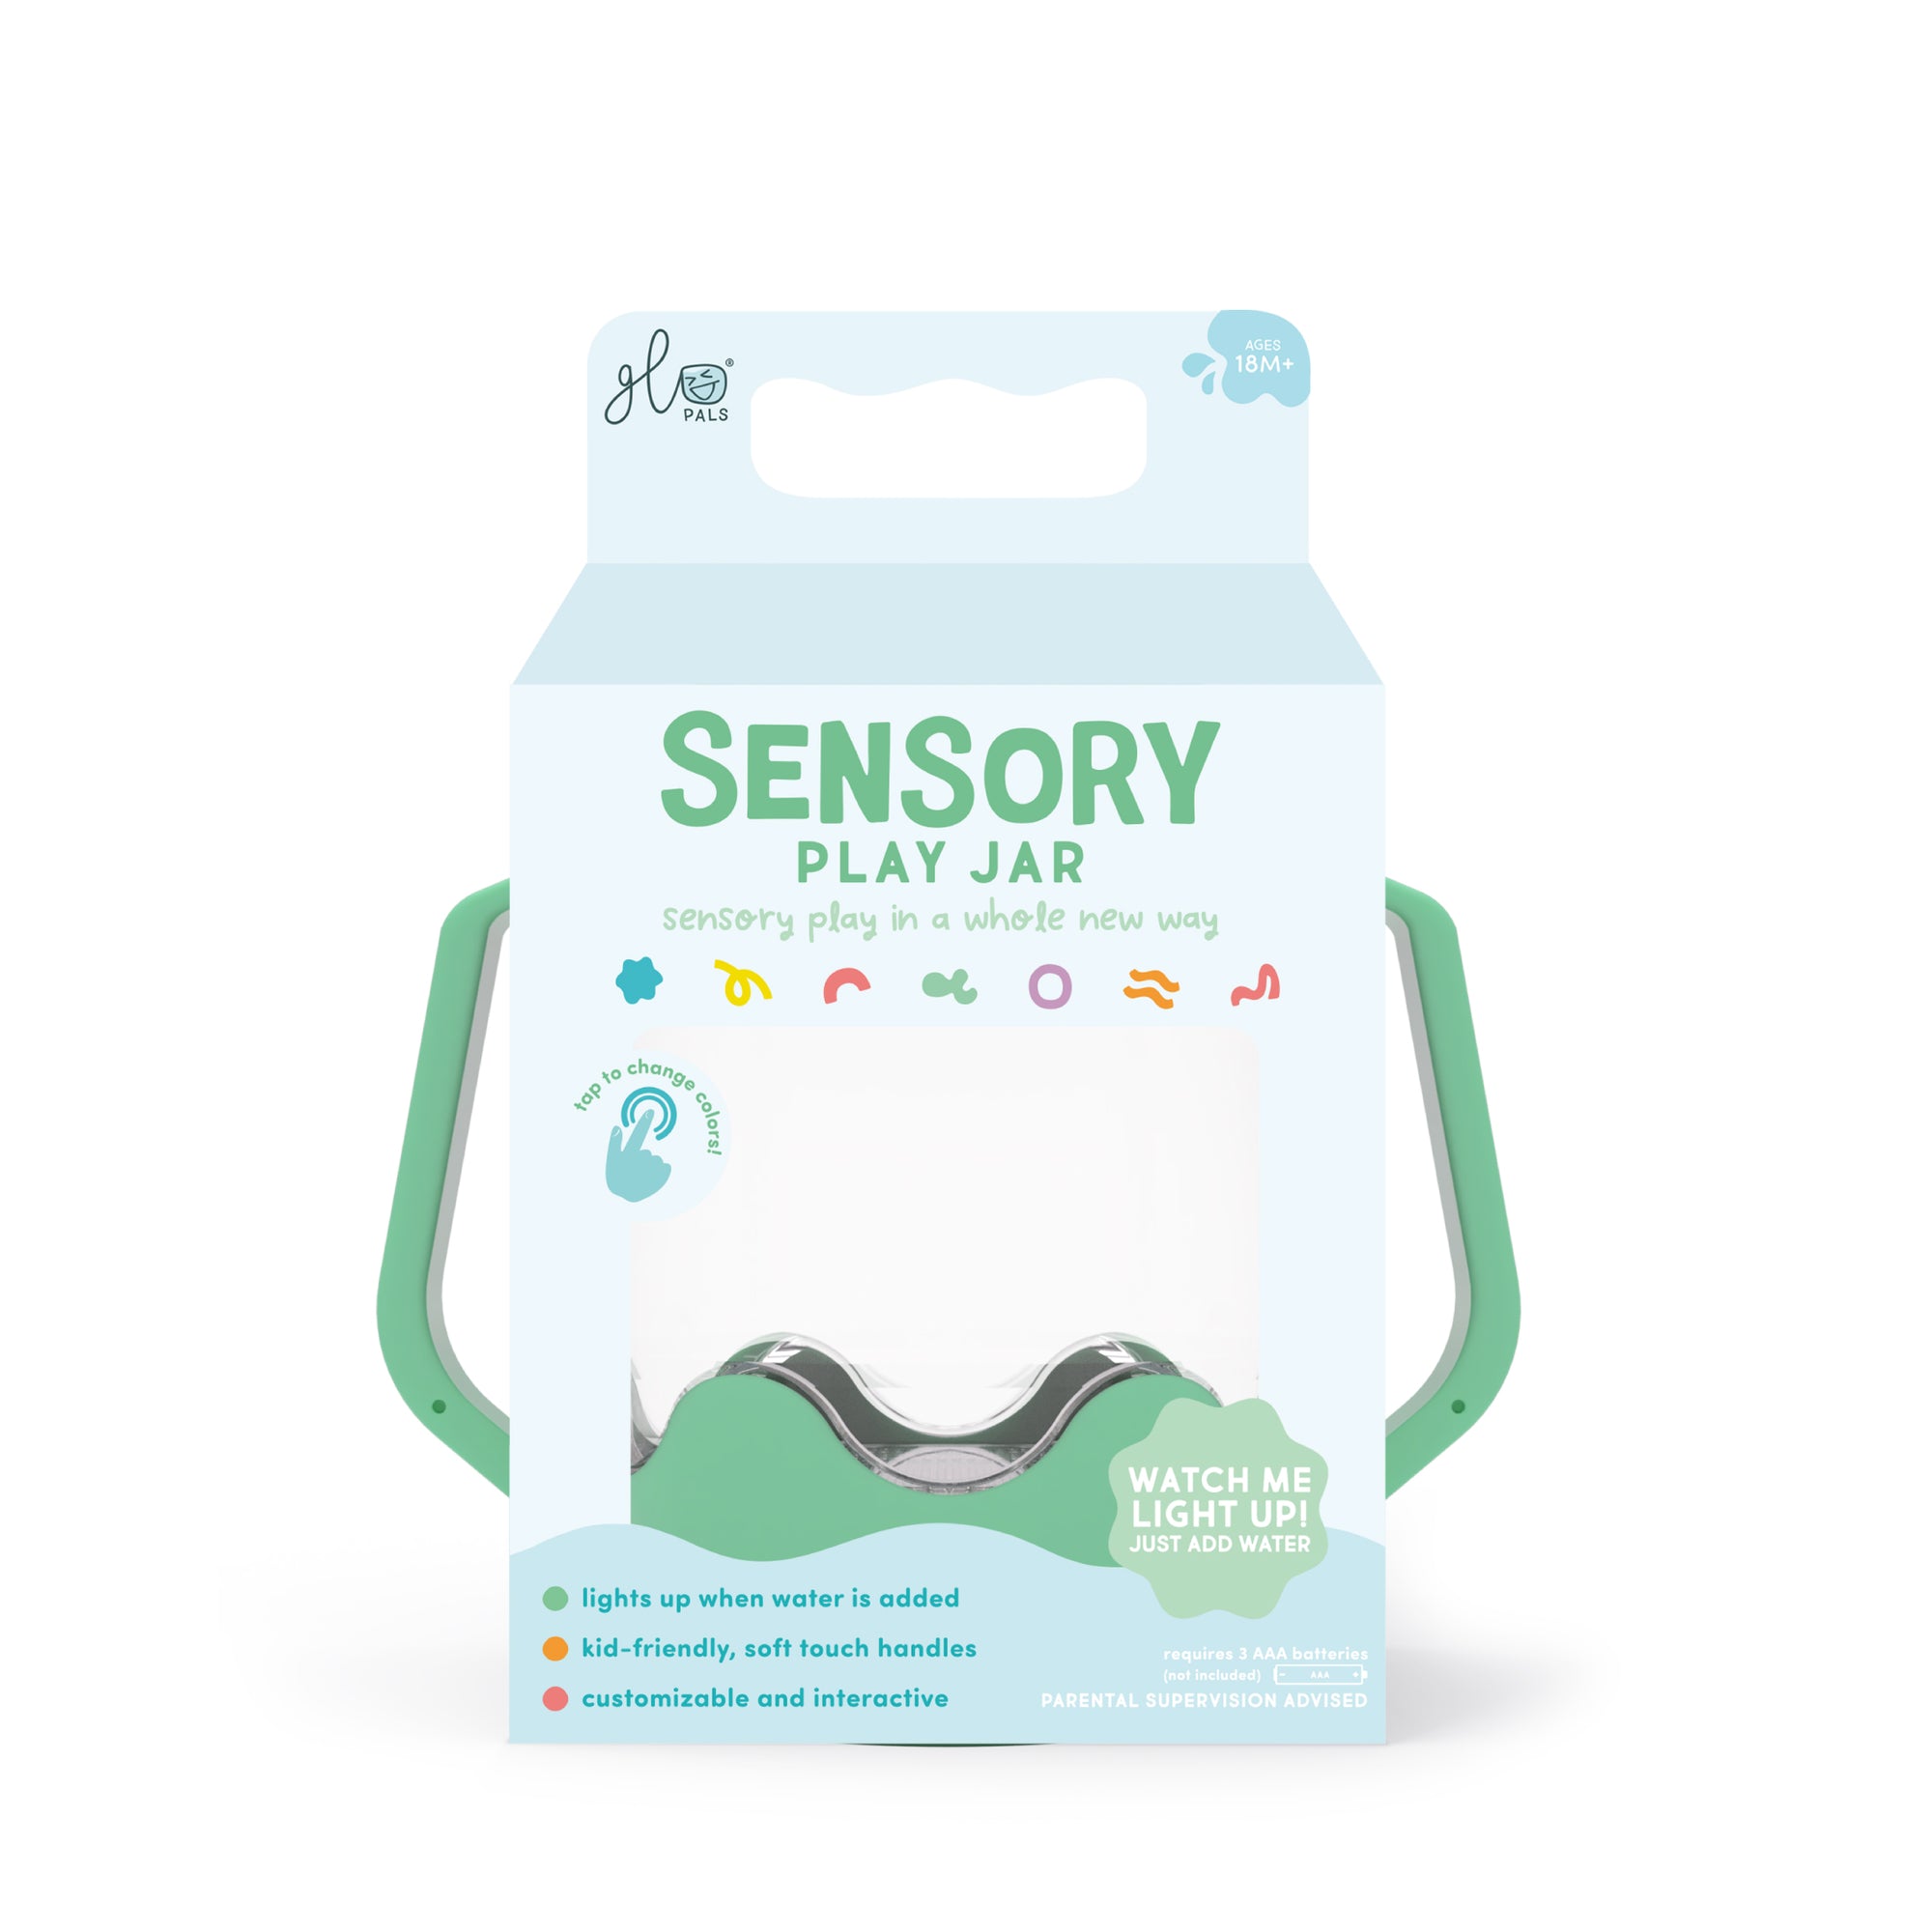 Sensory Play Jar